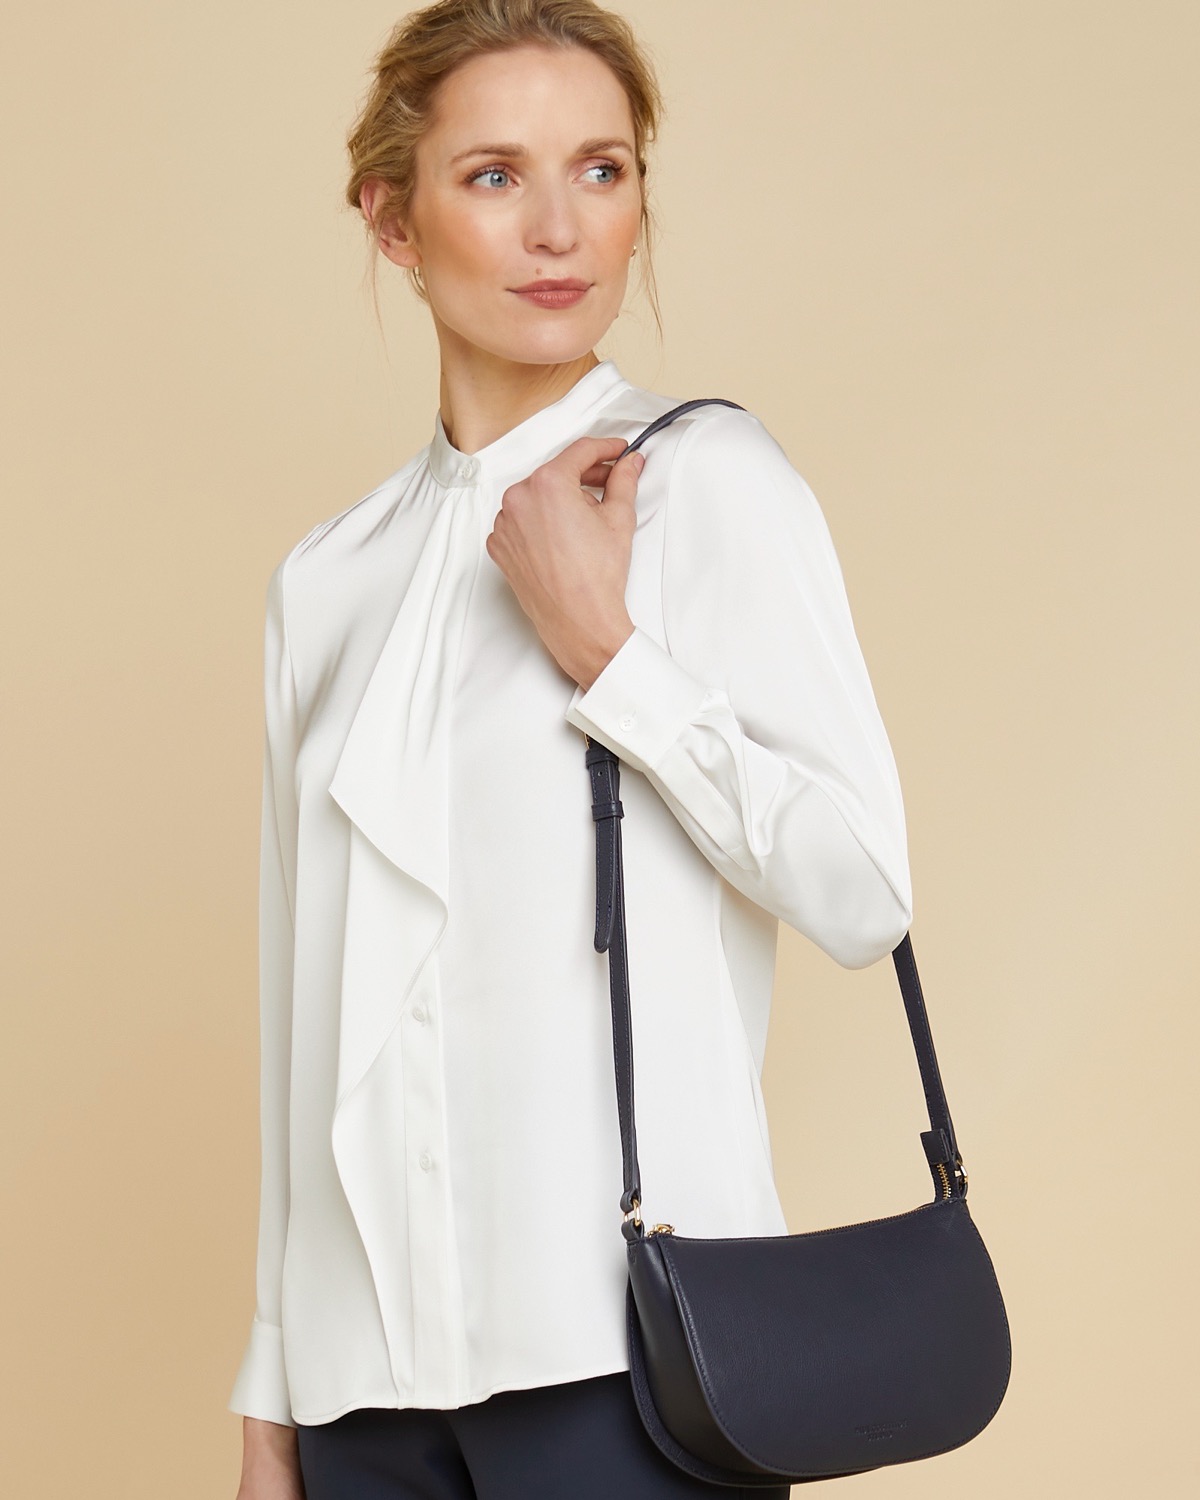 Margot Women's Leather Exterior Bags & Handbags for sale